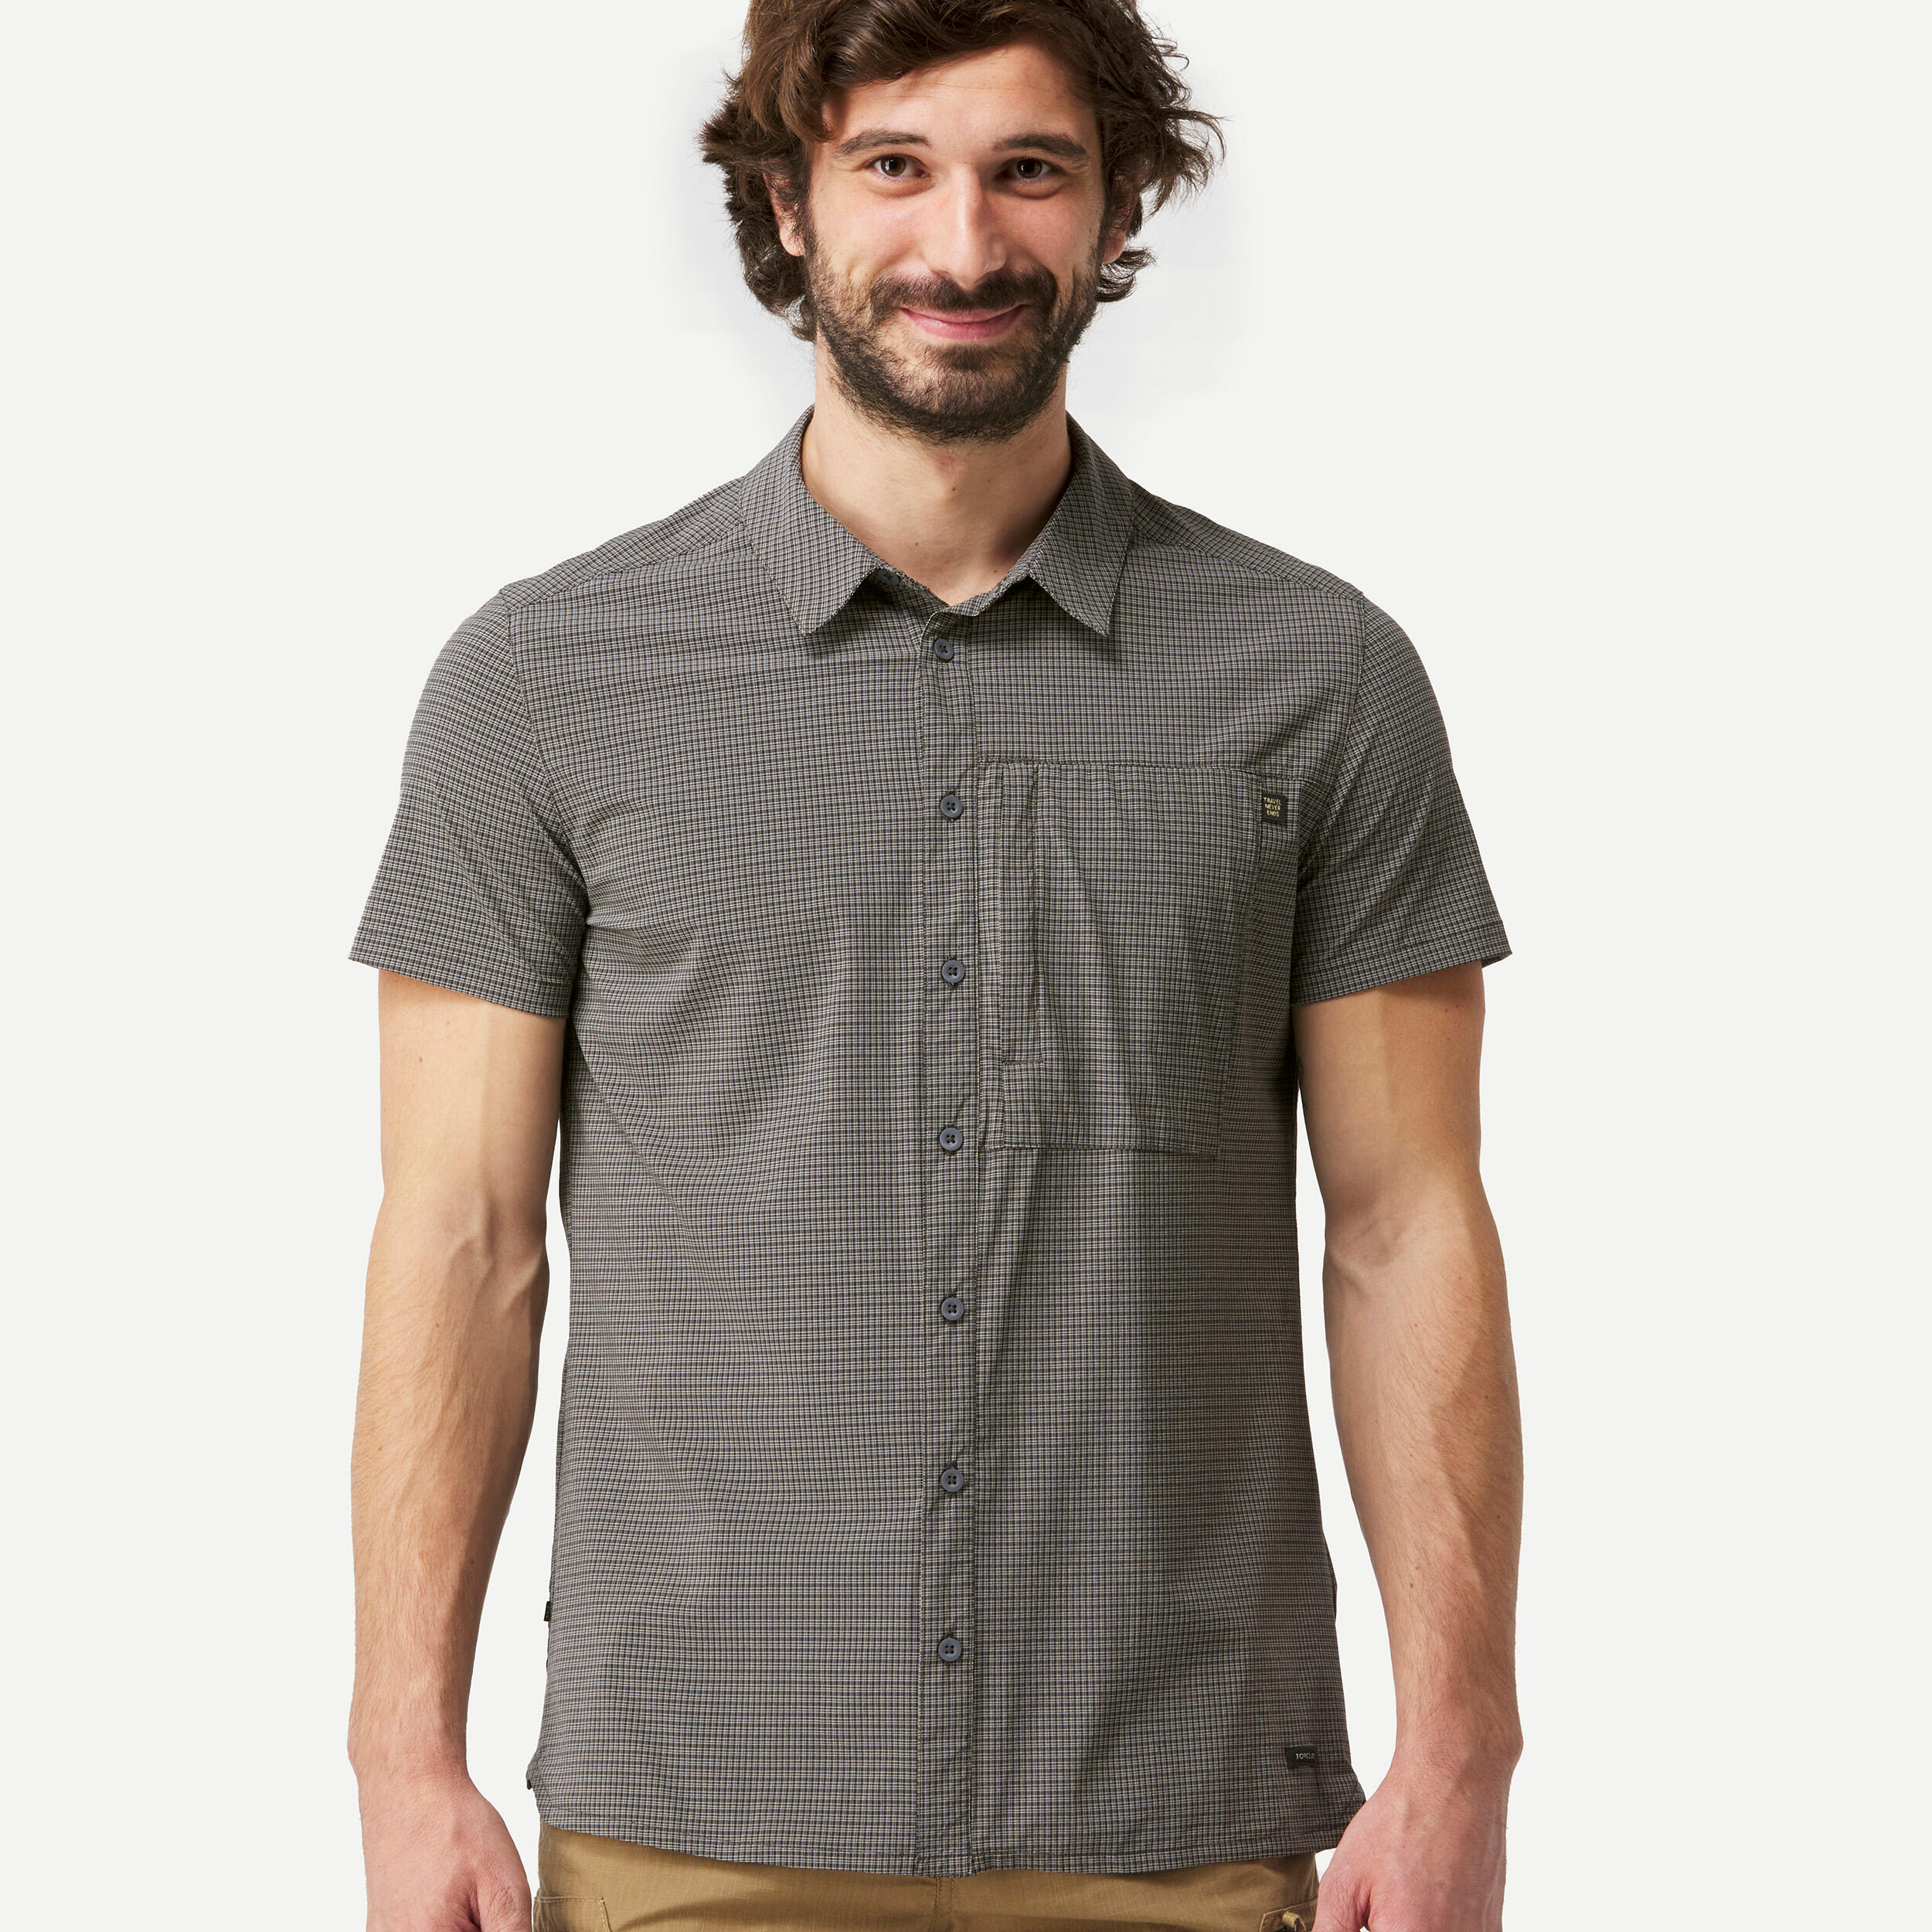 Men's Short-Sleeved Hiking Shirt - Travel 500 - Carbon grey, Linen